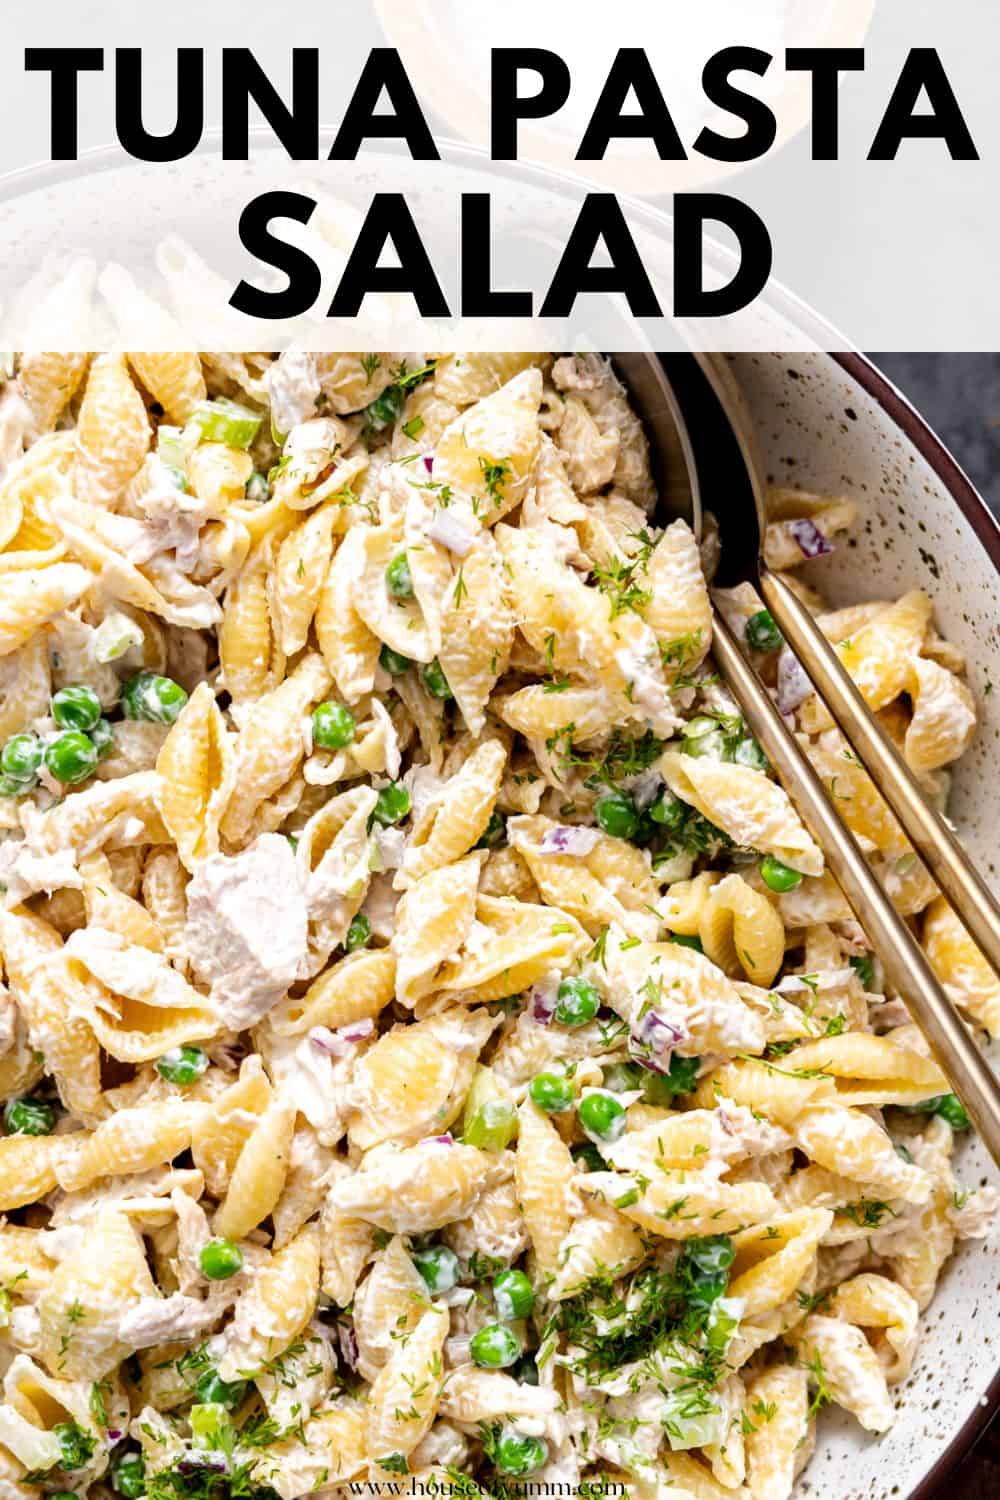 Tuna pasta salad with text.